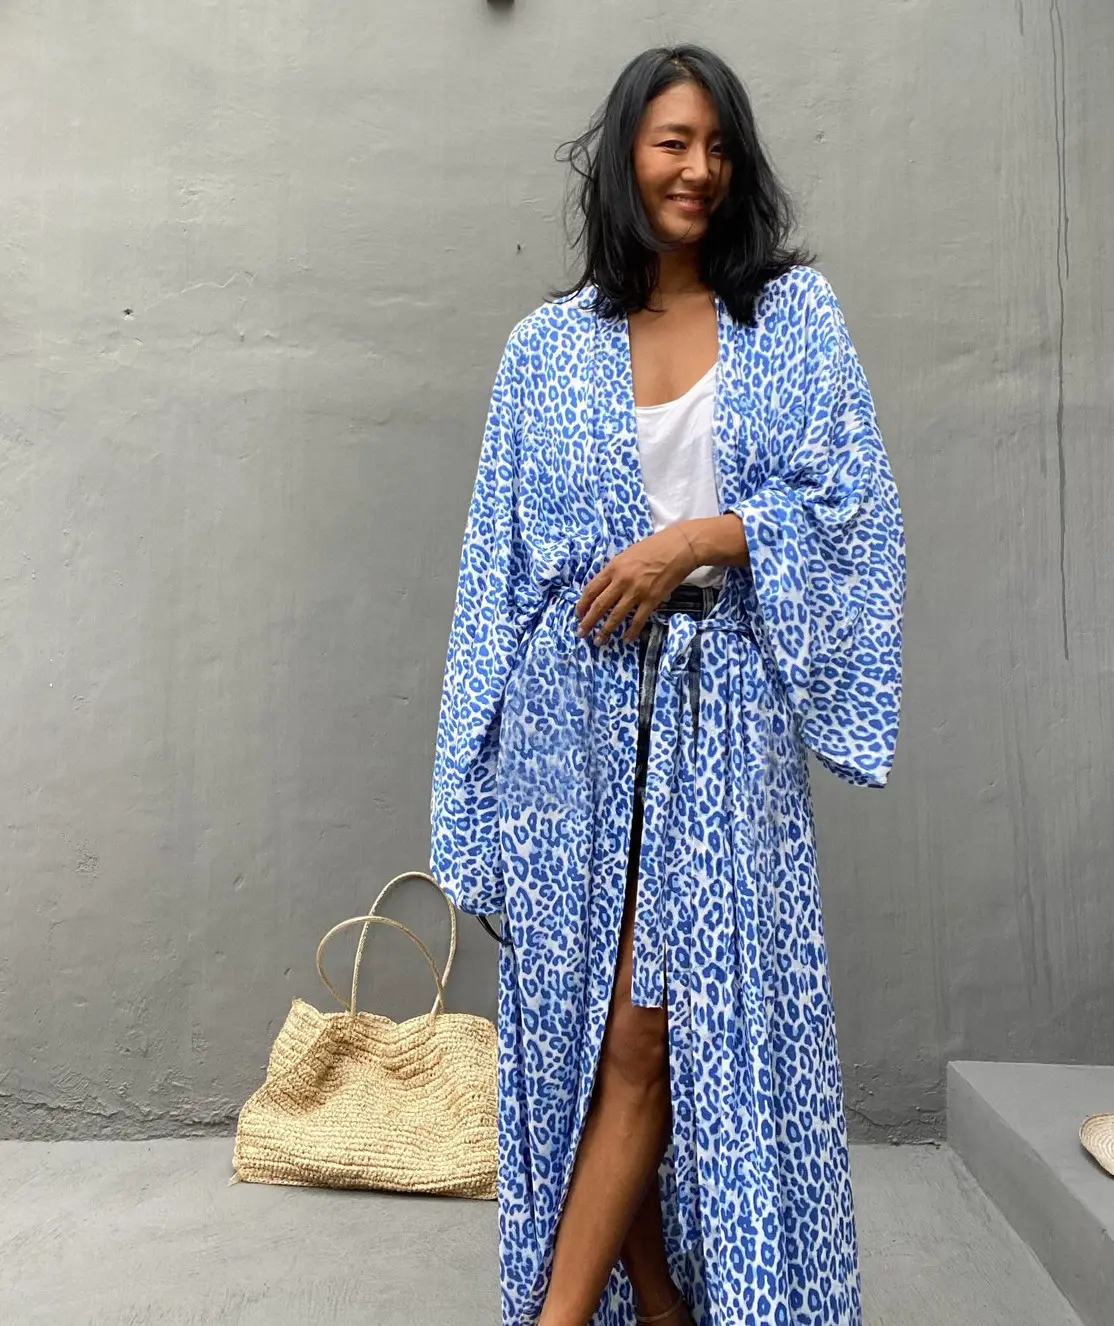 Rayon fabric OEM factory dresses for ladies amazon swim cover up women plus size kimono cardigan blue Leopard top woman blouse